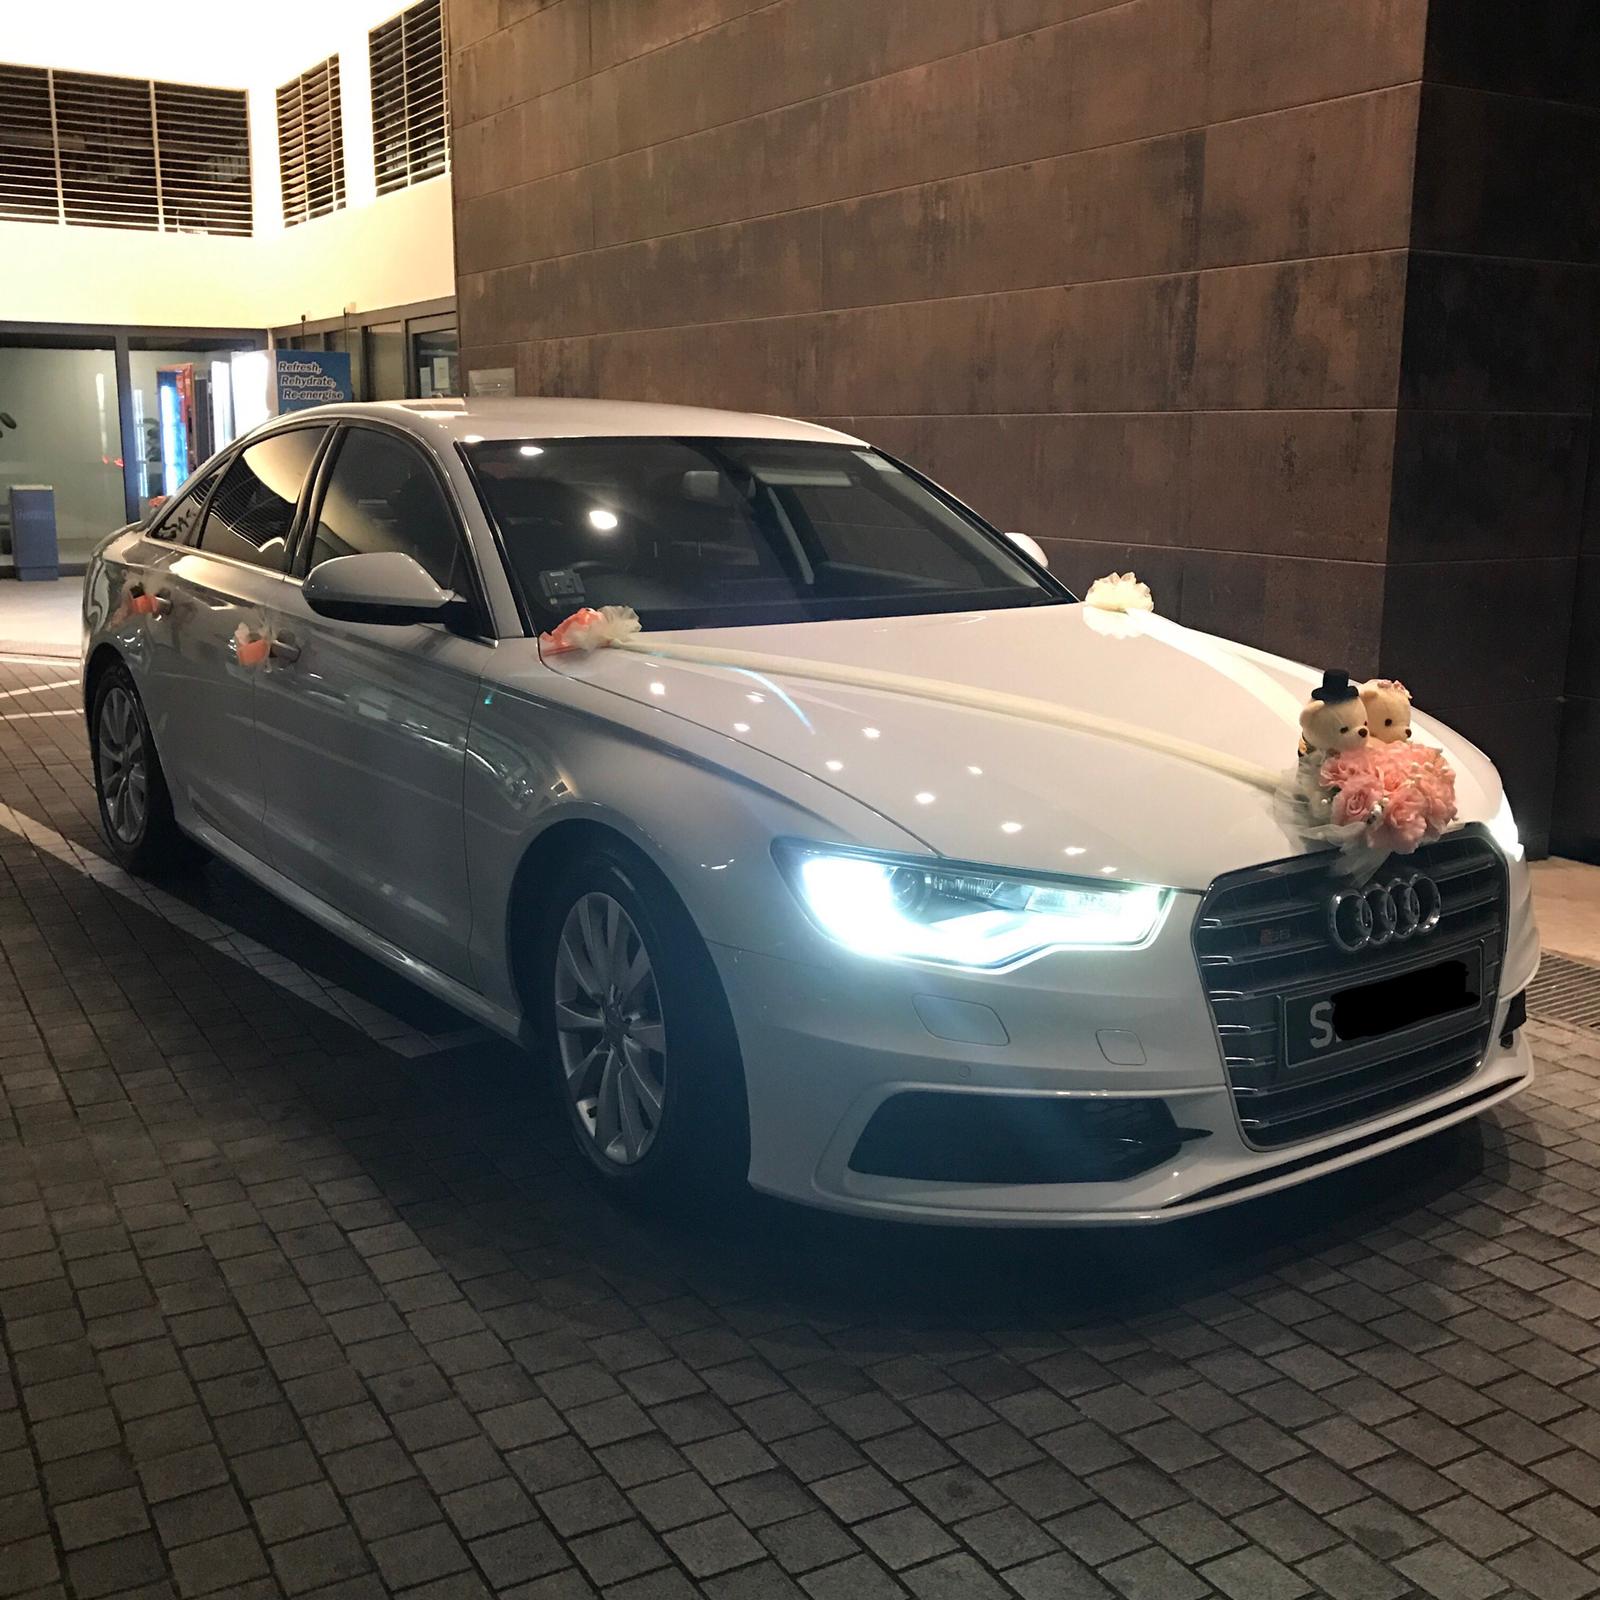 Audi A6 wedding car at night